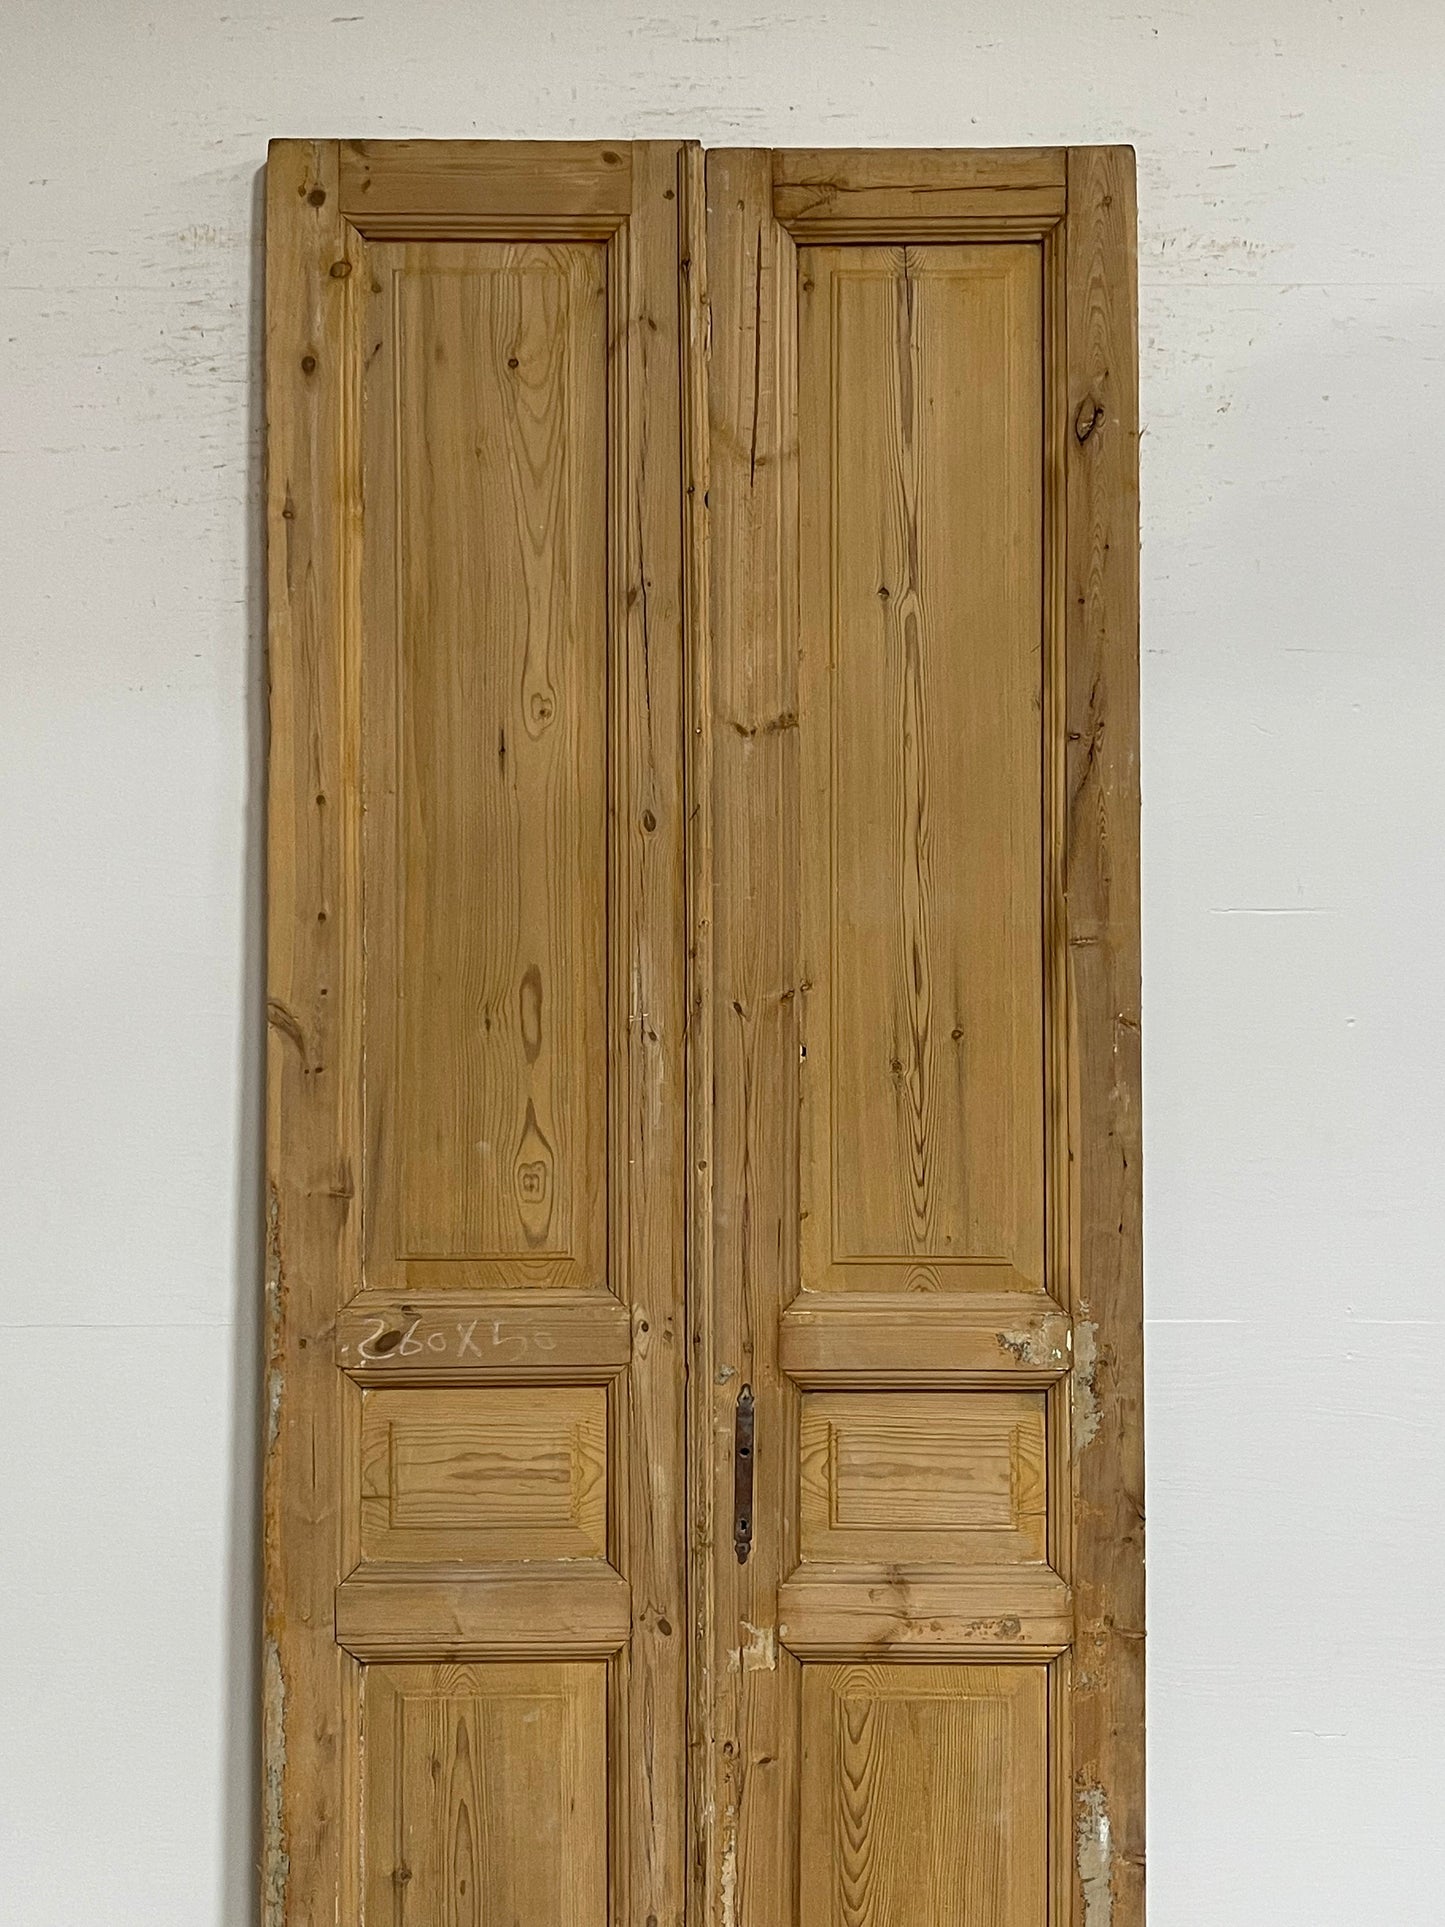 Antique French panel doors (101.5x39.5) G0195s